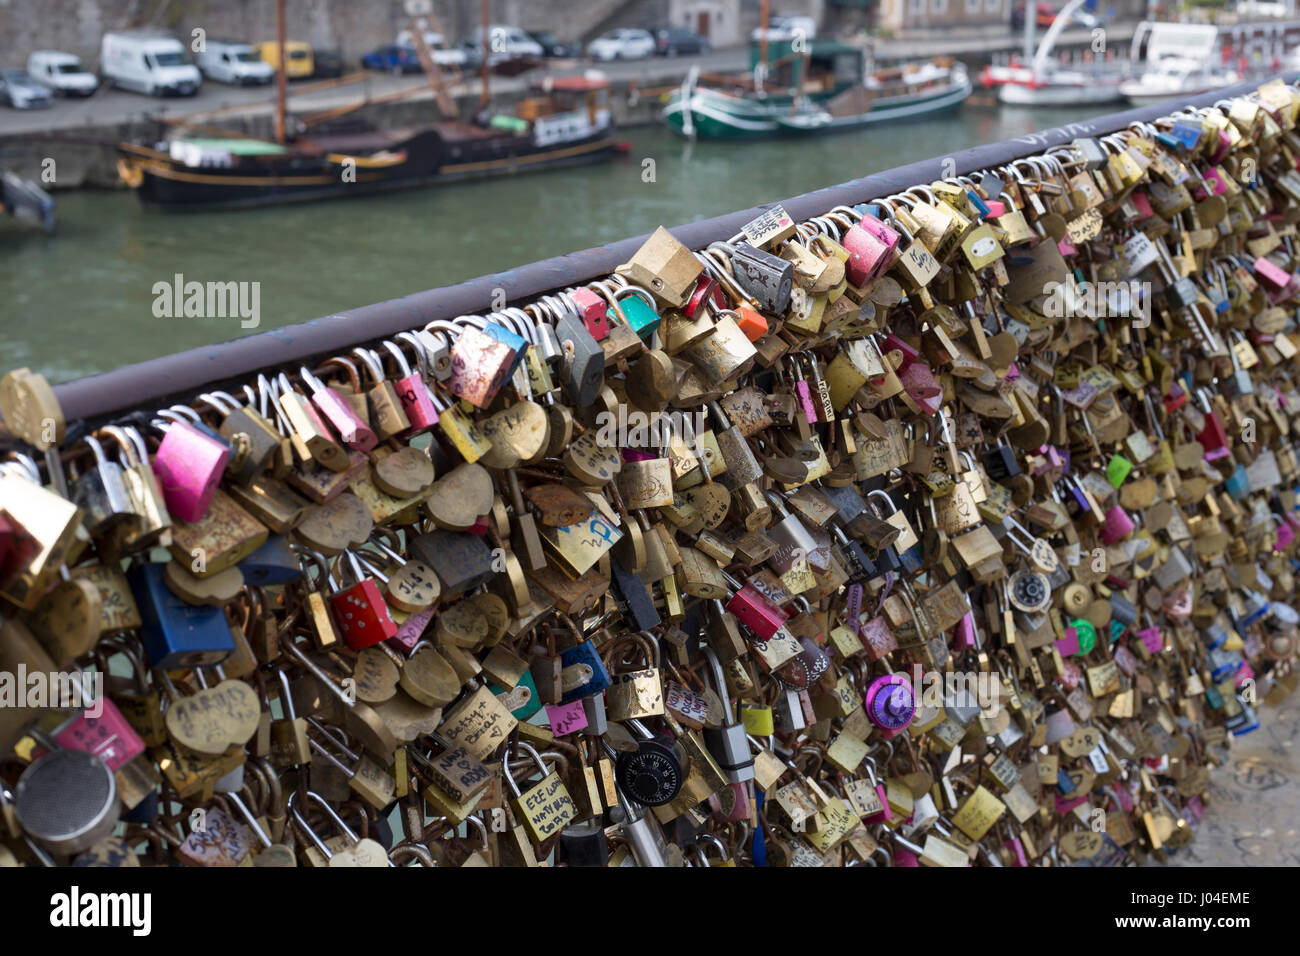 File:Love locks @ Pont Neuf @ Paris (25321430149).jpg - Wikimedia Commons